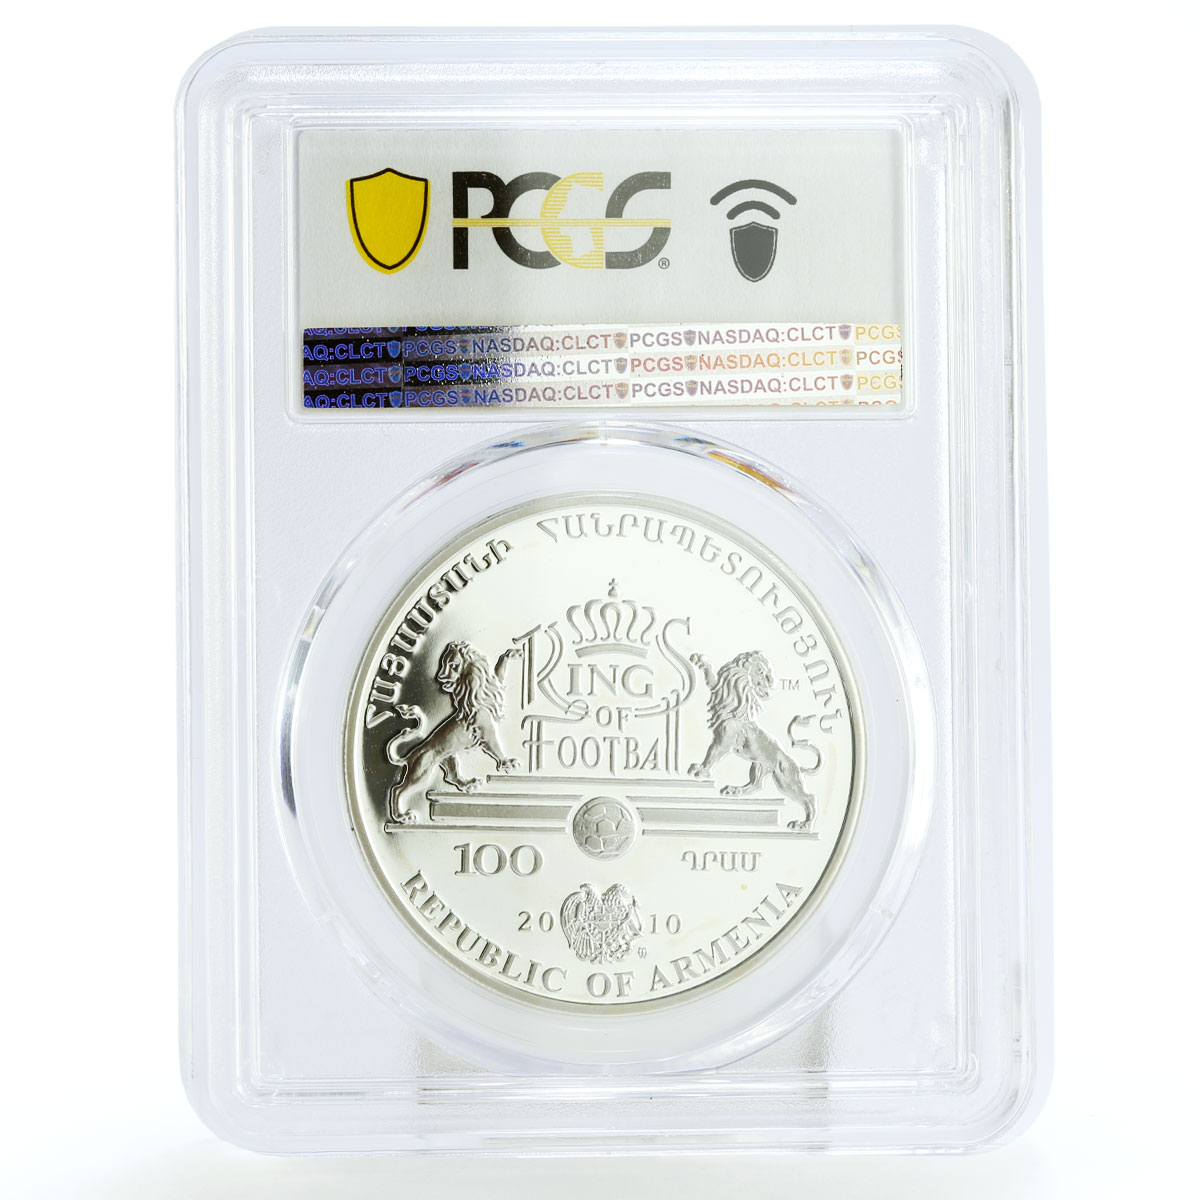 Armenia 100 dram Kings of Football Johan Cruyff PR67 PCGS silver coin 2010